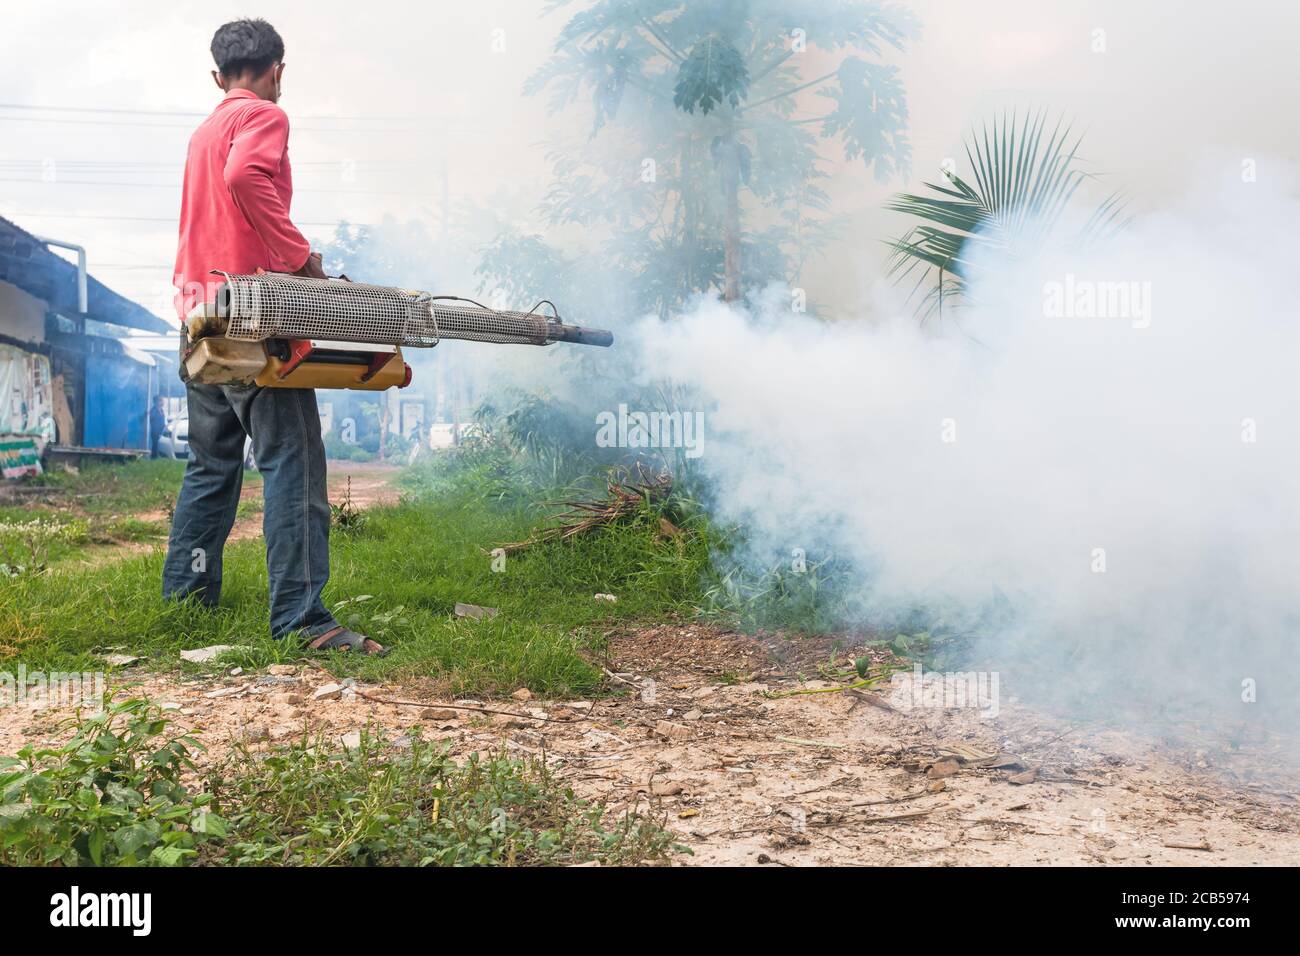 Man Fogging to prevent spread of dengue fever in Thailand Stock Photo